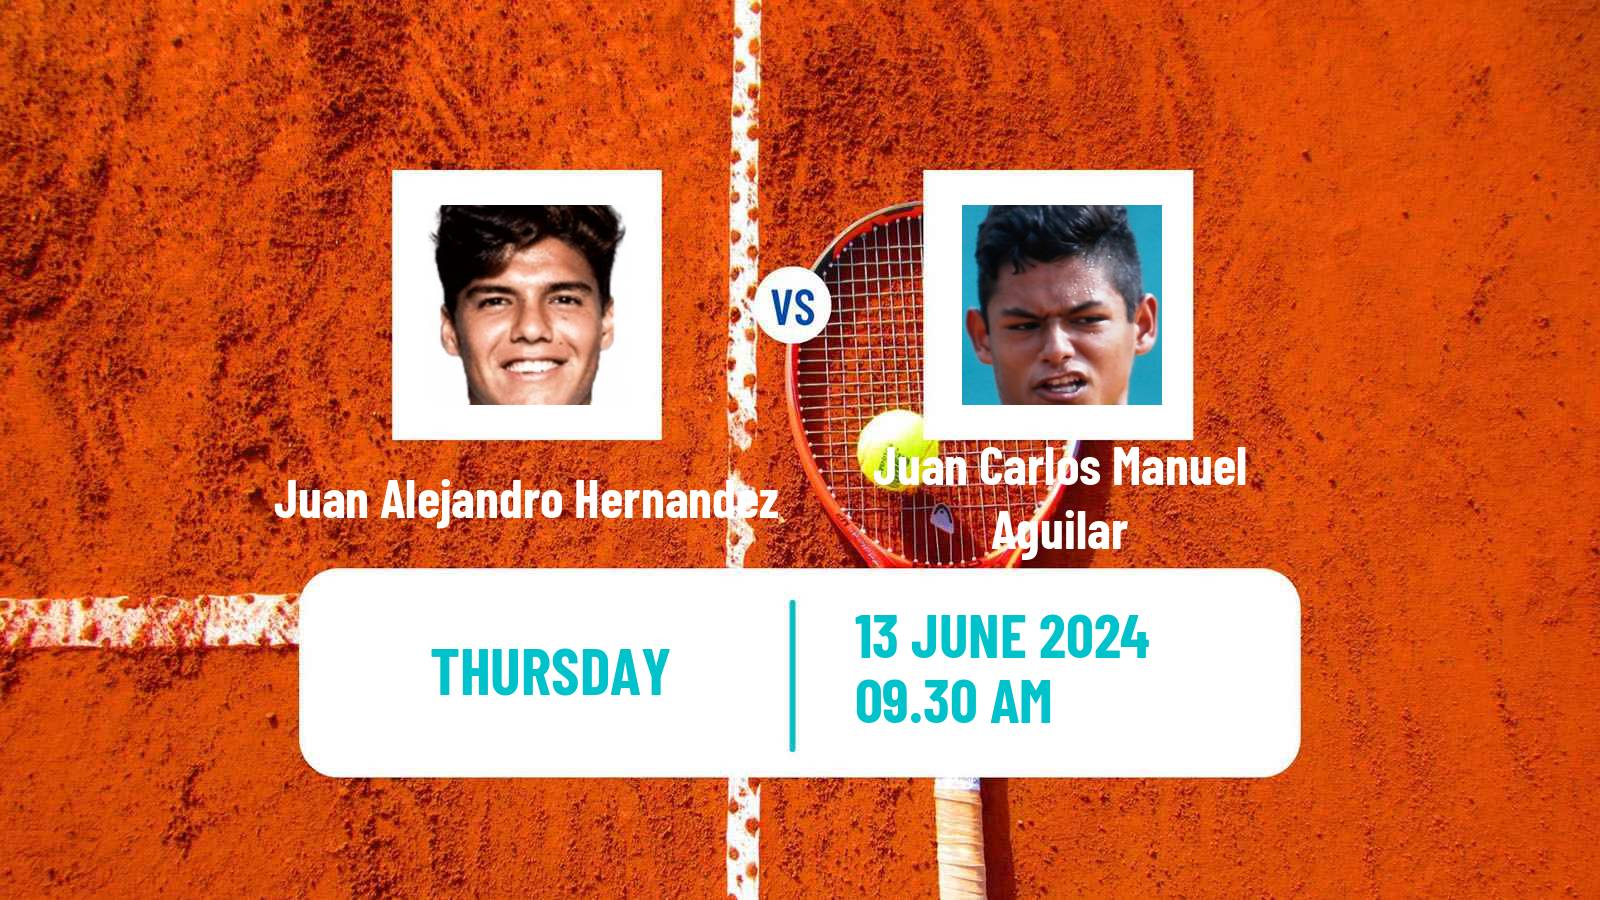 Tennis ITF M15 Santo Domingo 2 Men Juan Alejandro Hernandez - Juan Carlos Manuel Aguilar